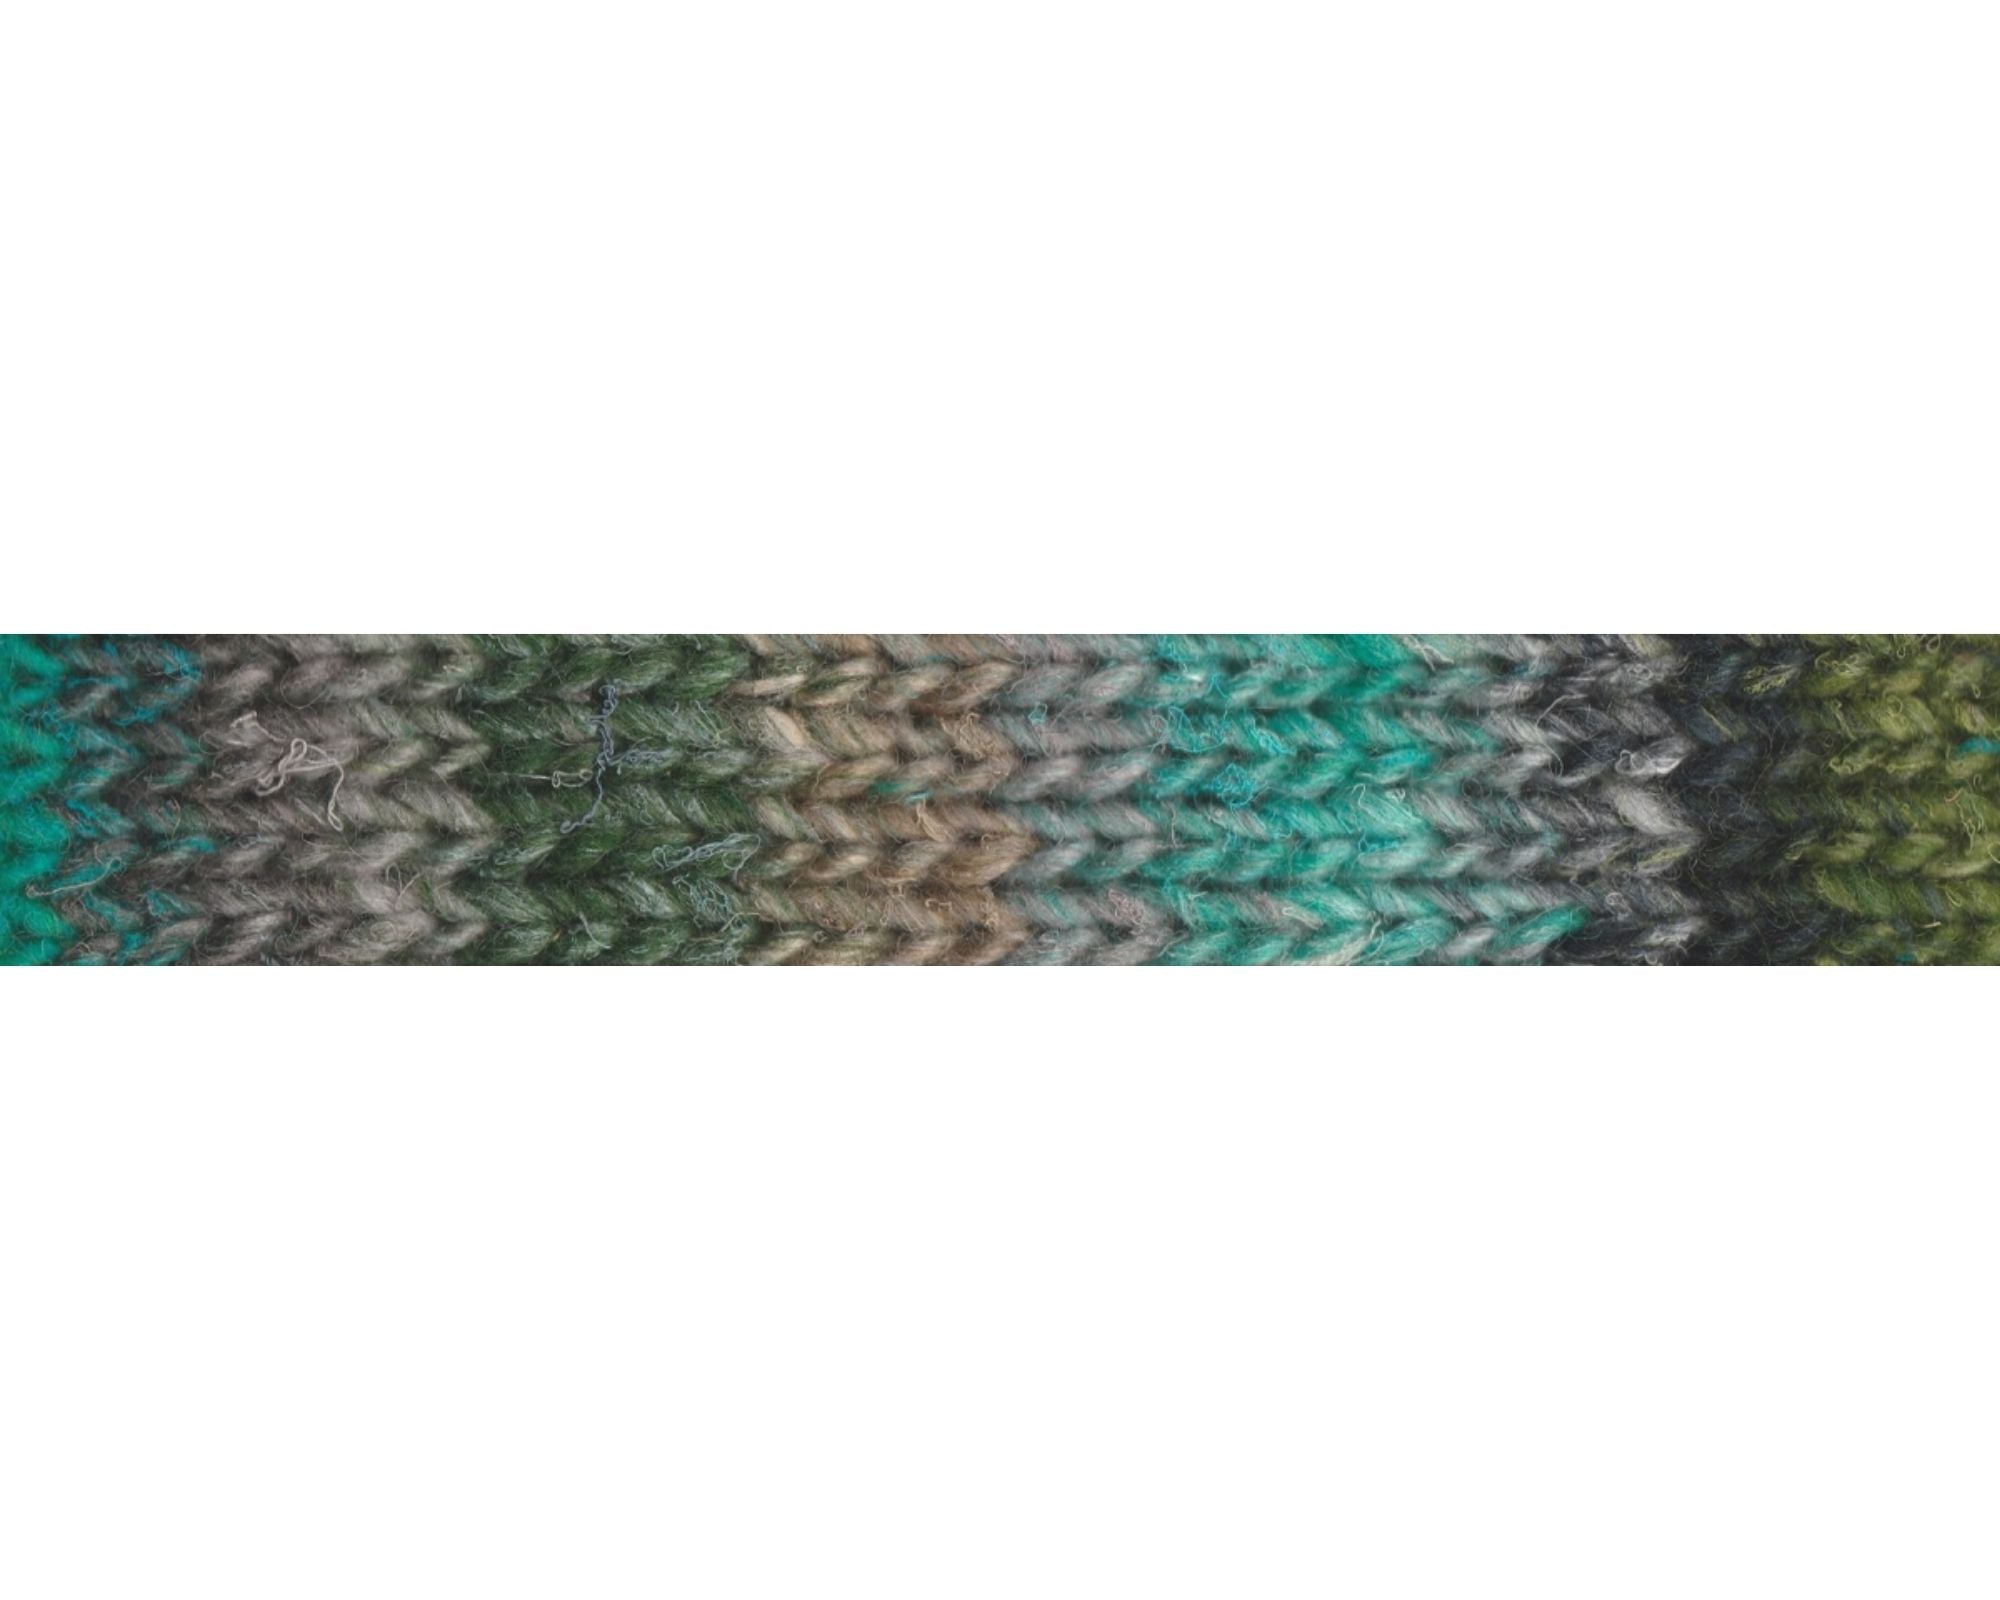 Silk Garden Crochet Sweater Kit